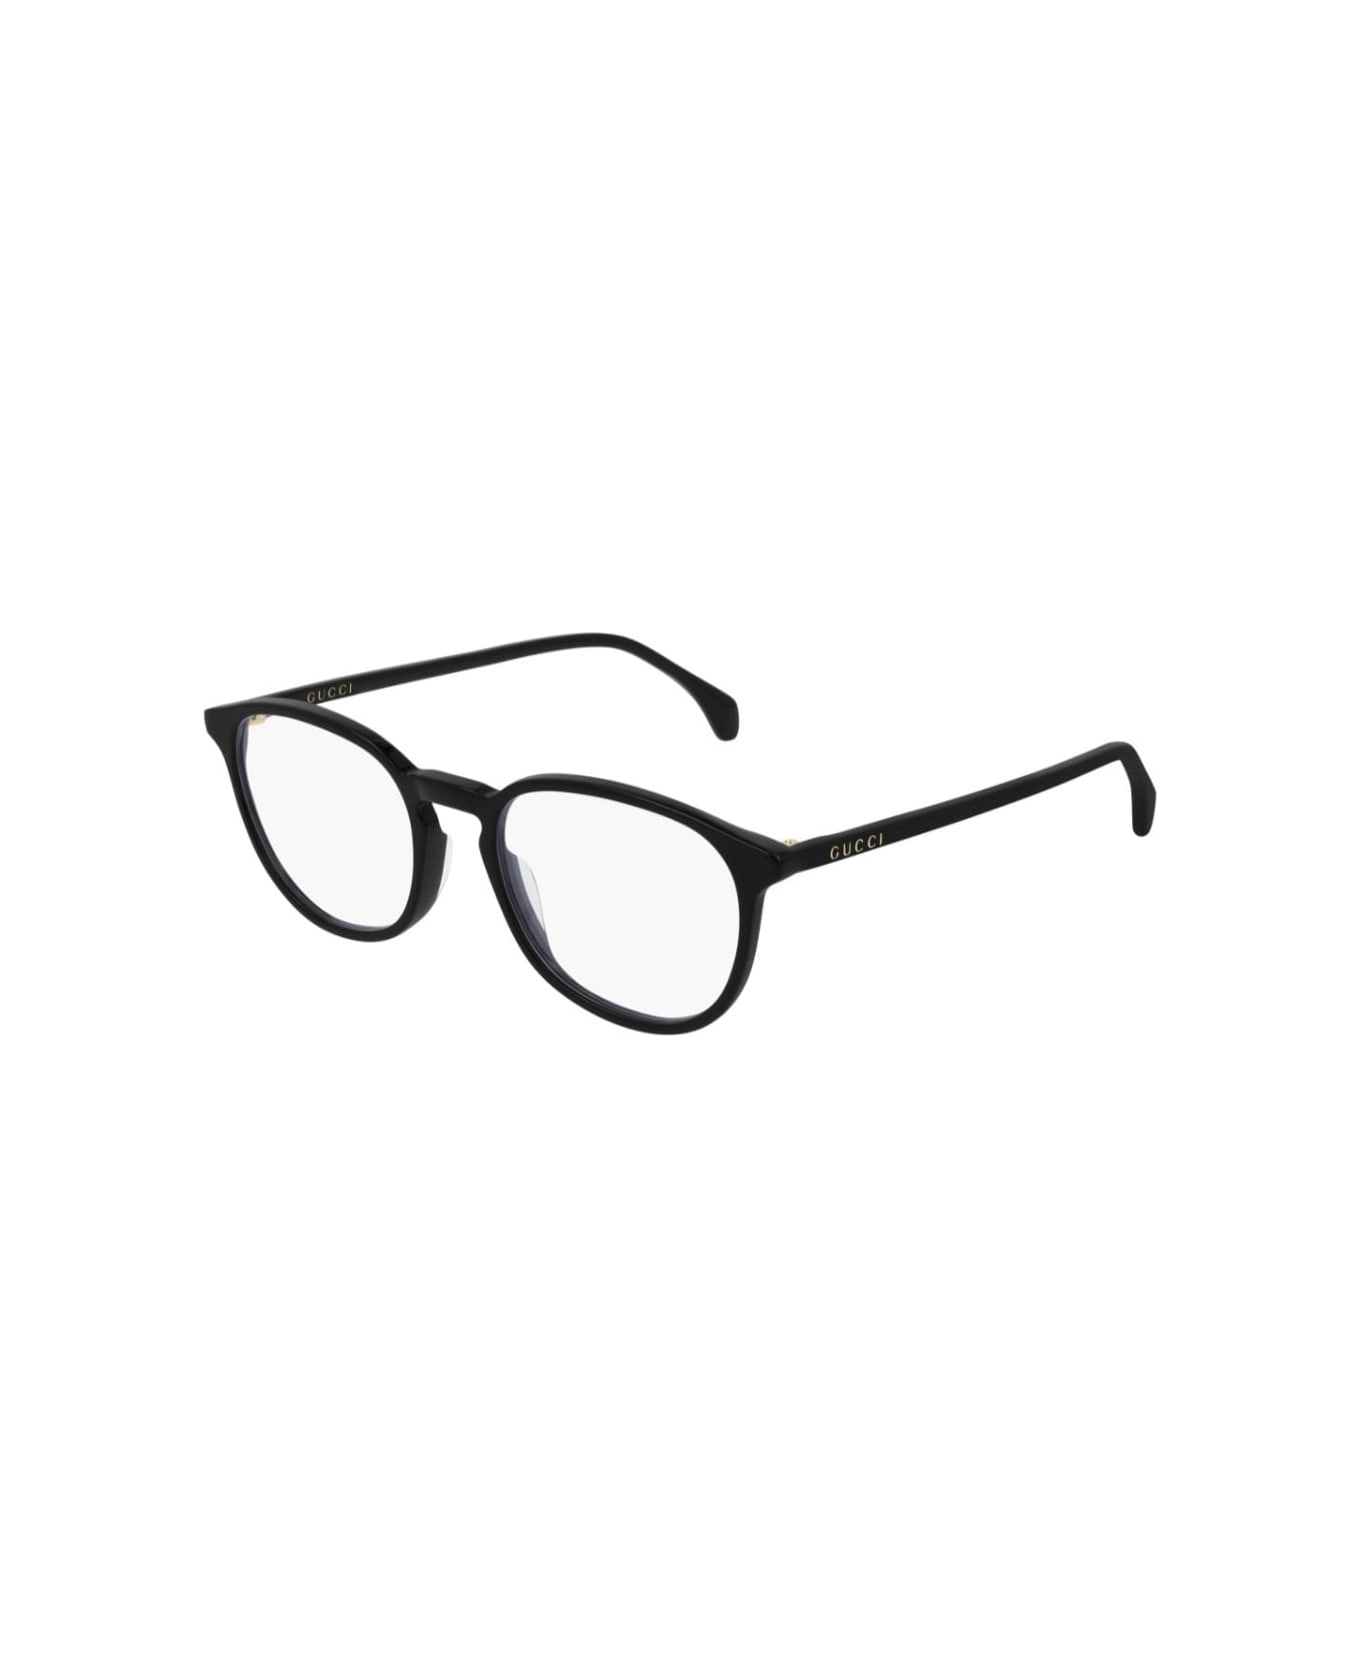 Gucci Eyewear GG0551 001 Glasses - Nero アイウェア